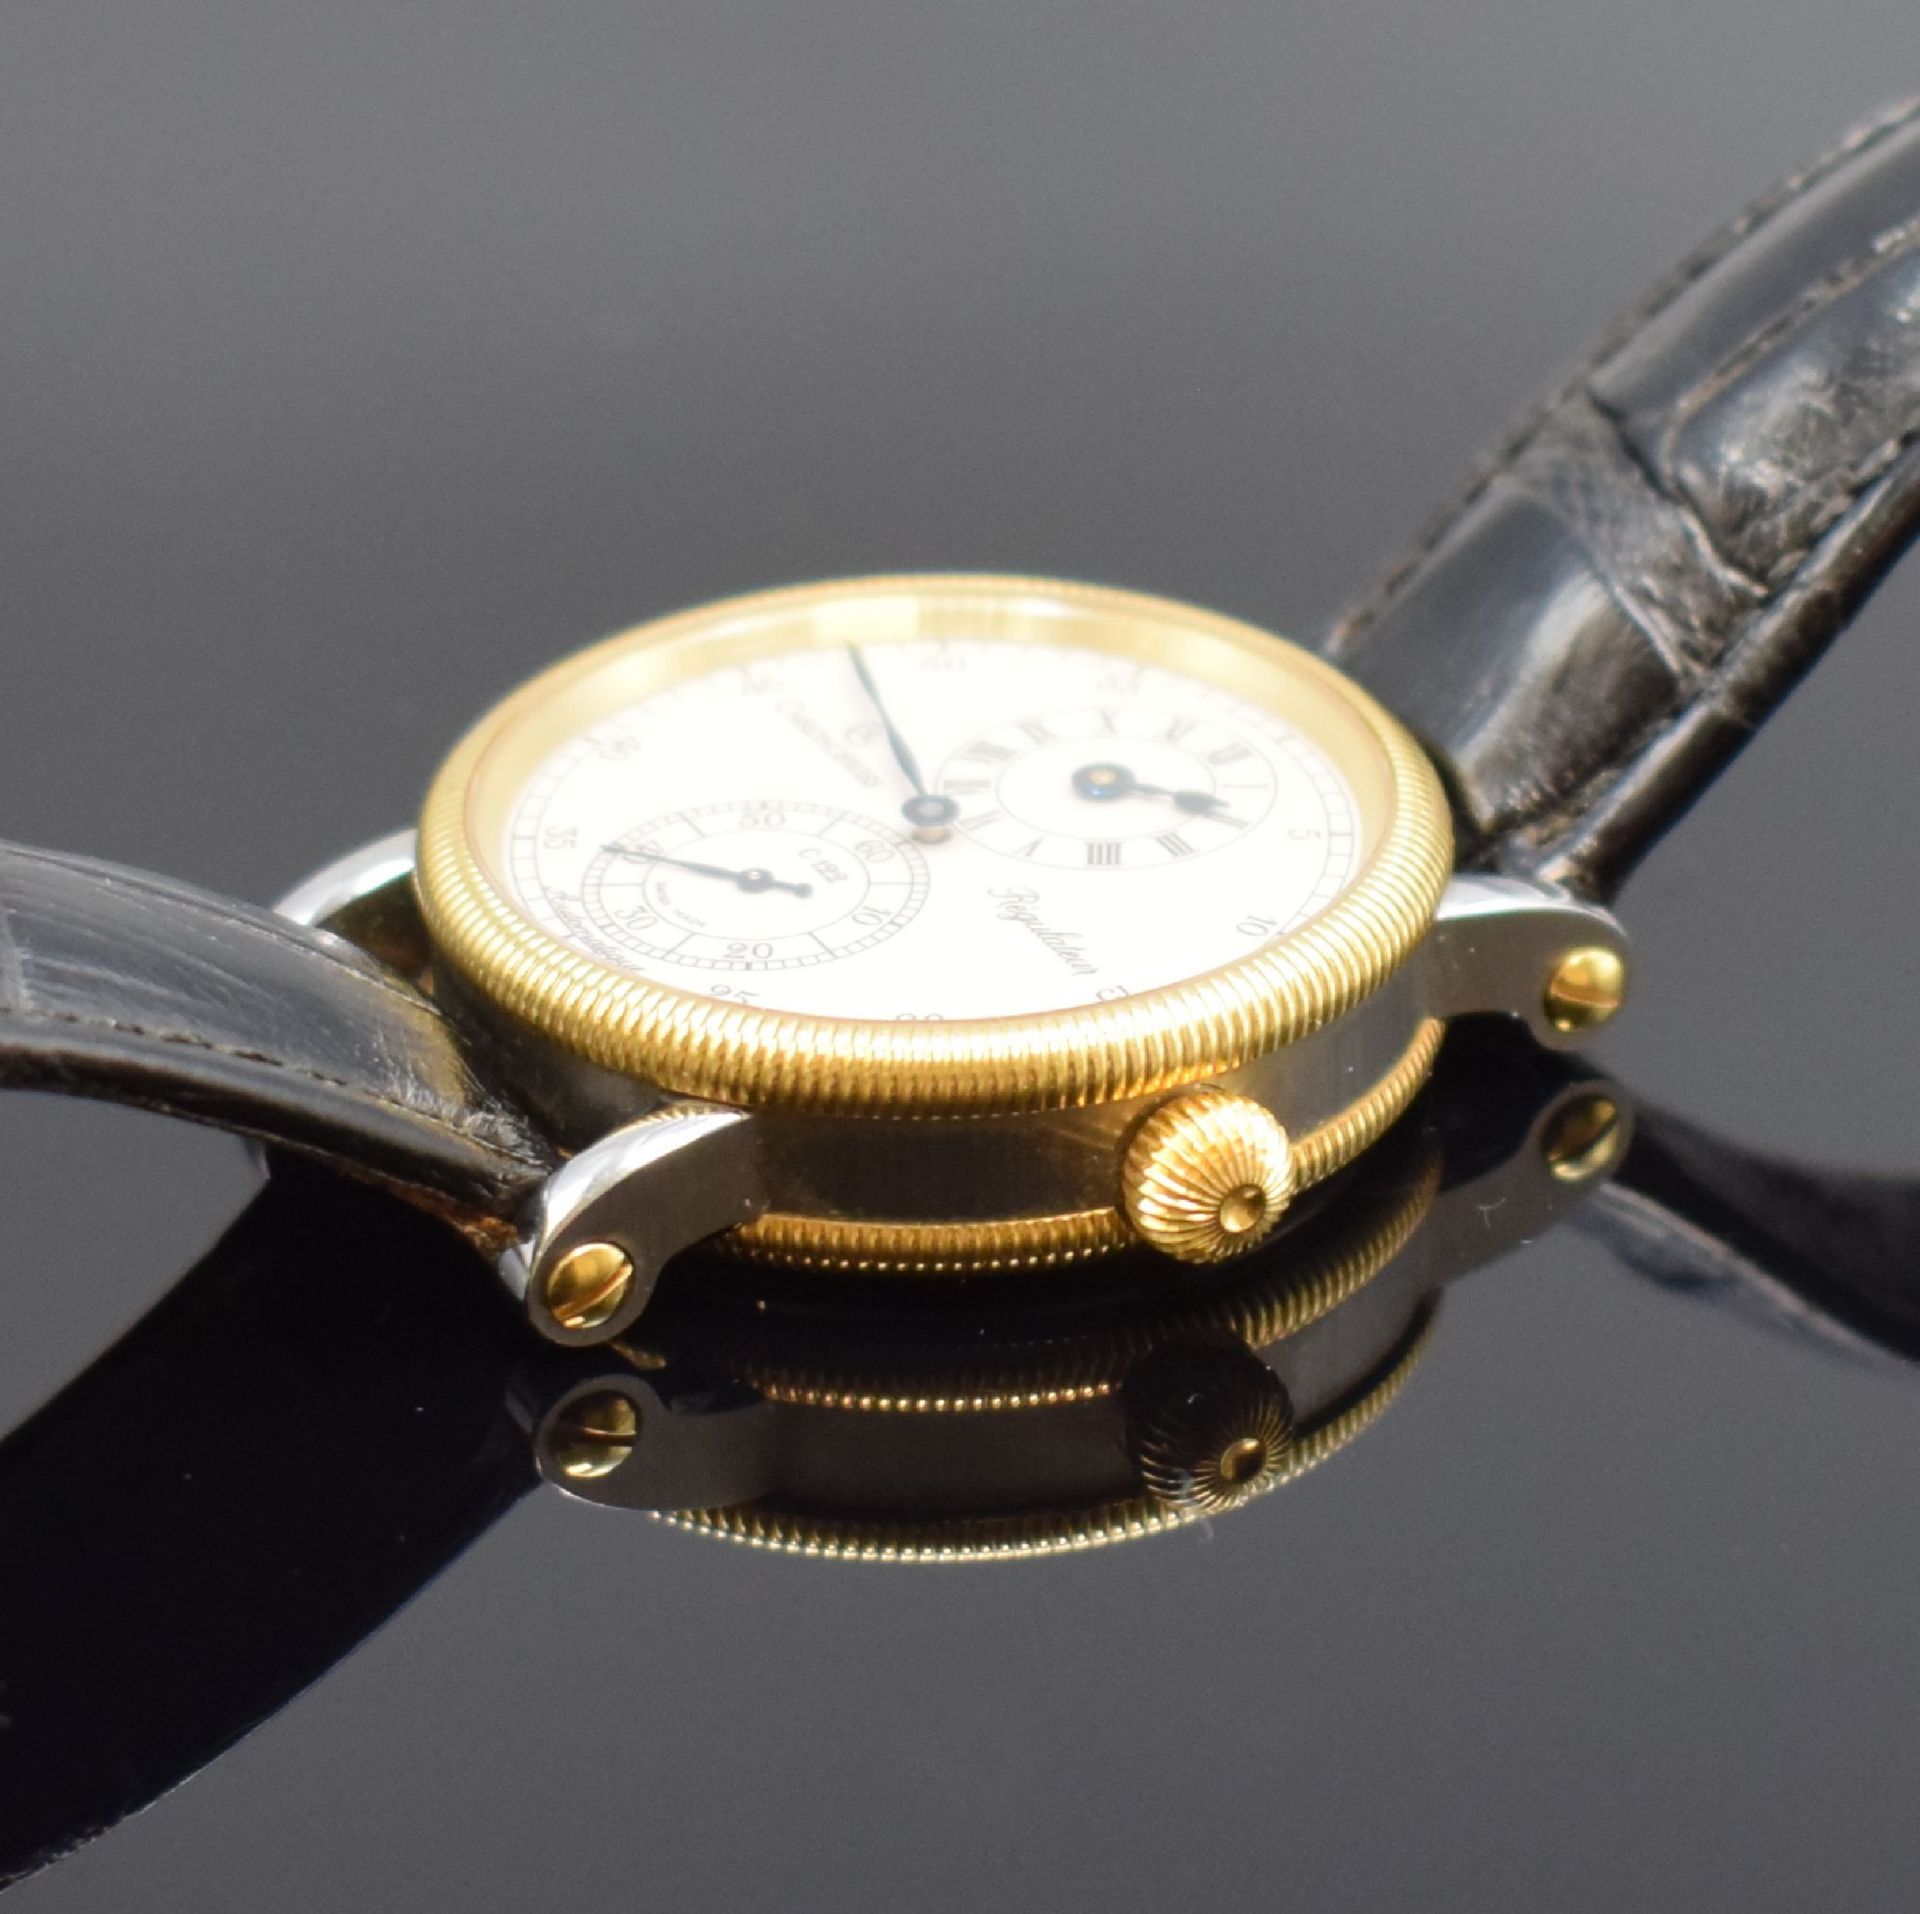 CHRONOSWISS Regulateur Medium-Armbanduhr in Stahl und Gold - Image 4 of 6